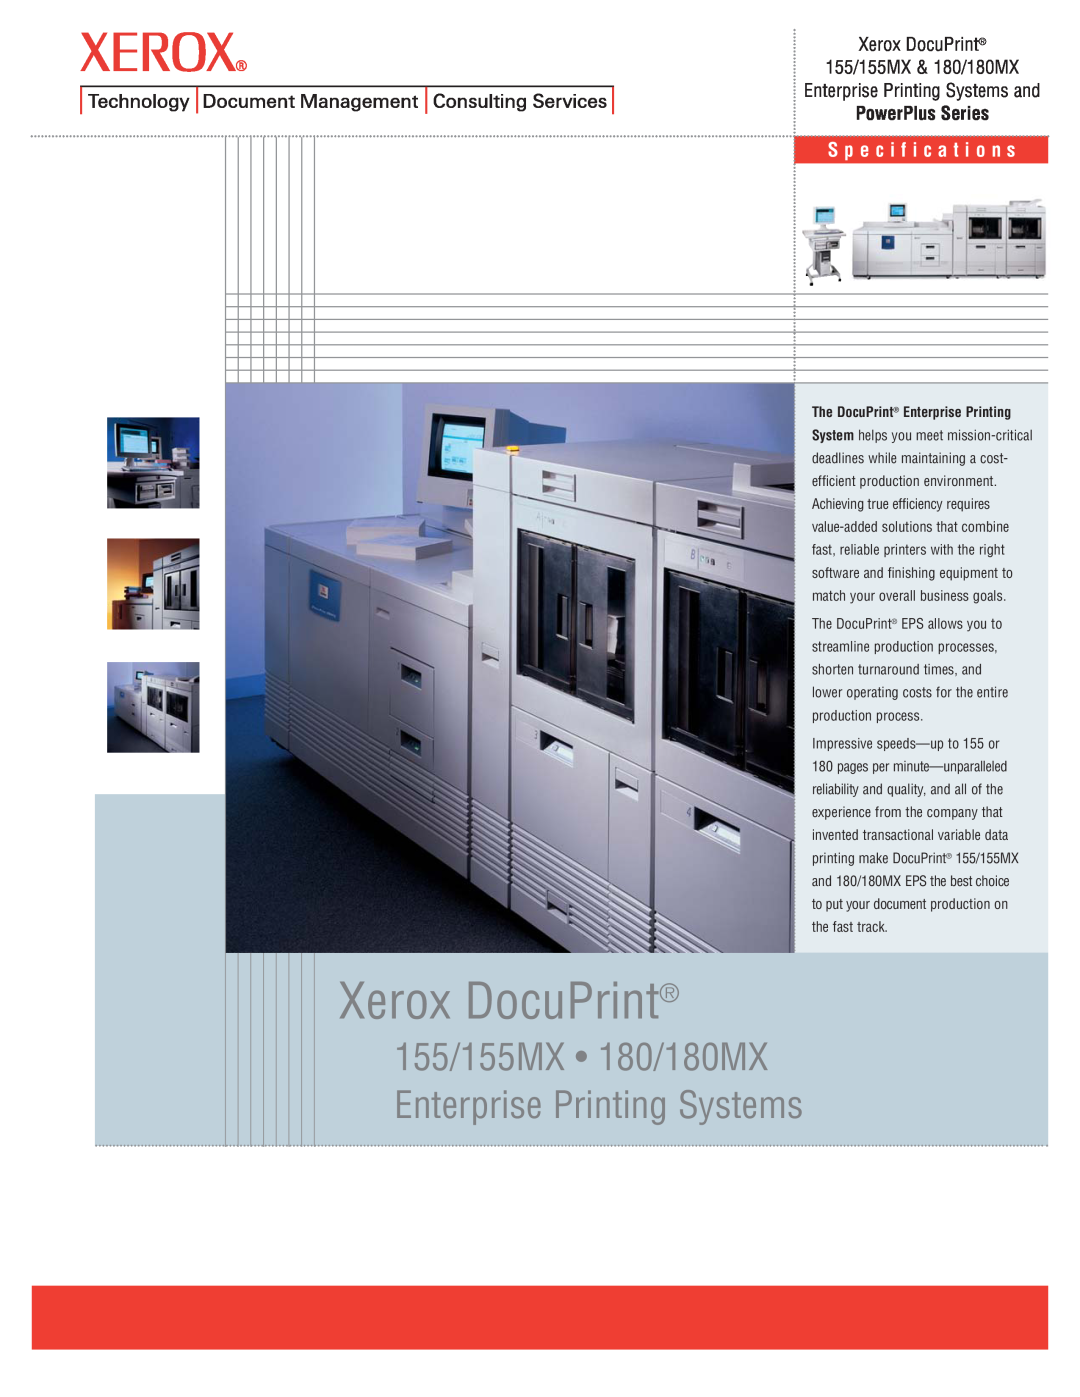 Xerox specifications Xerox DocuPrint, 155/155MX 180/180MX Enterprise Printing Systems, S p e c i f i c a t i o n s 